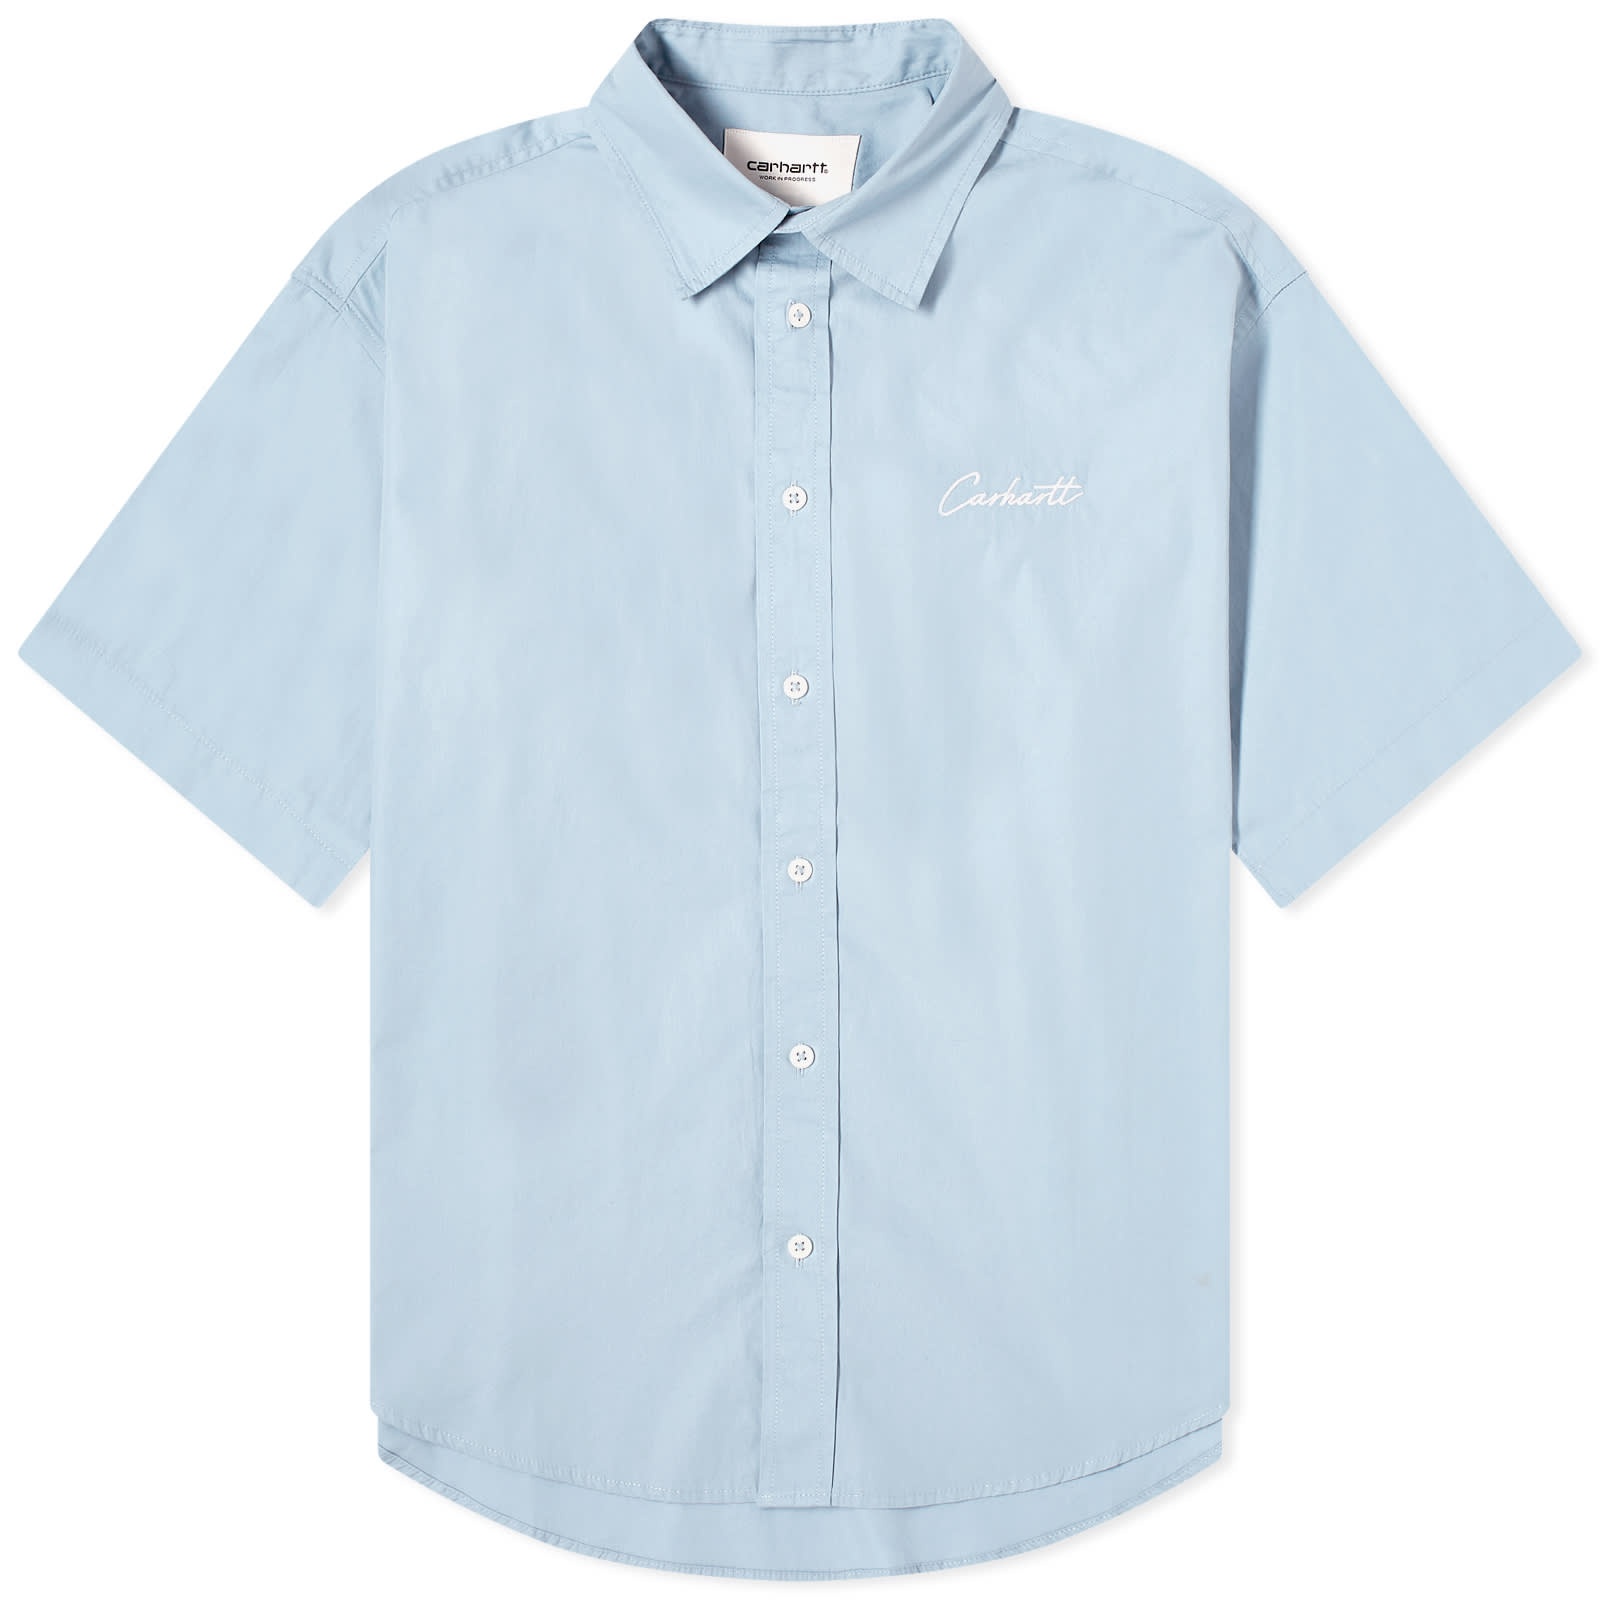 Carhartt WIP Short Sleeve Jaxon Shirt - 1